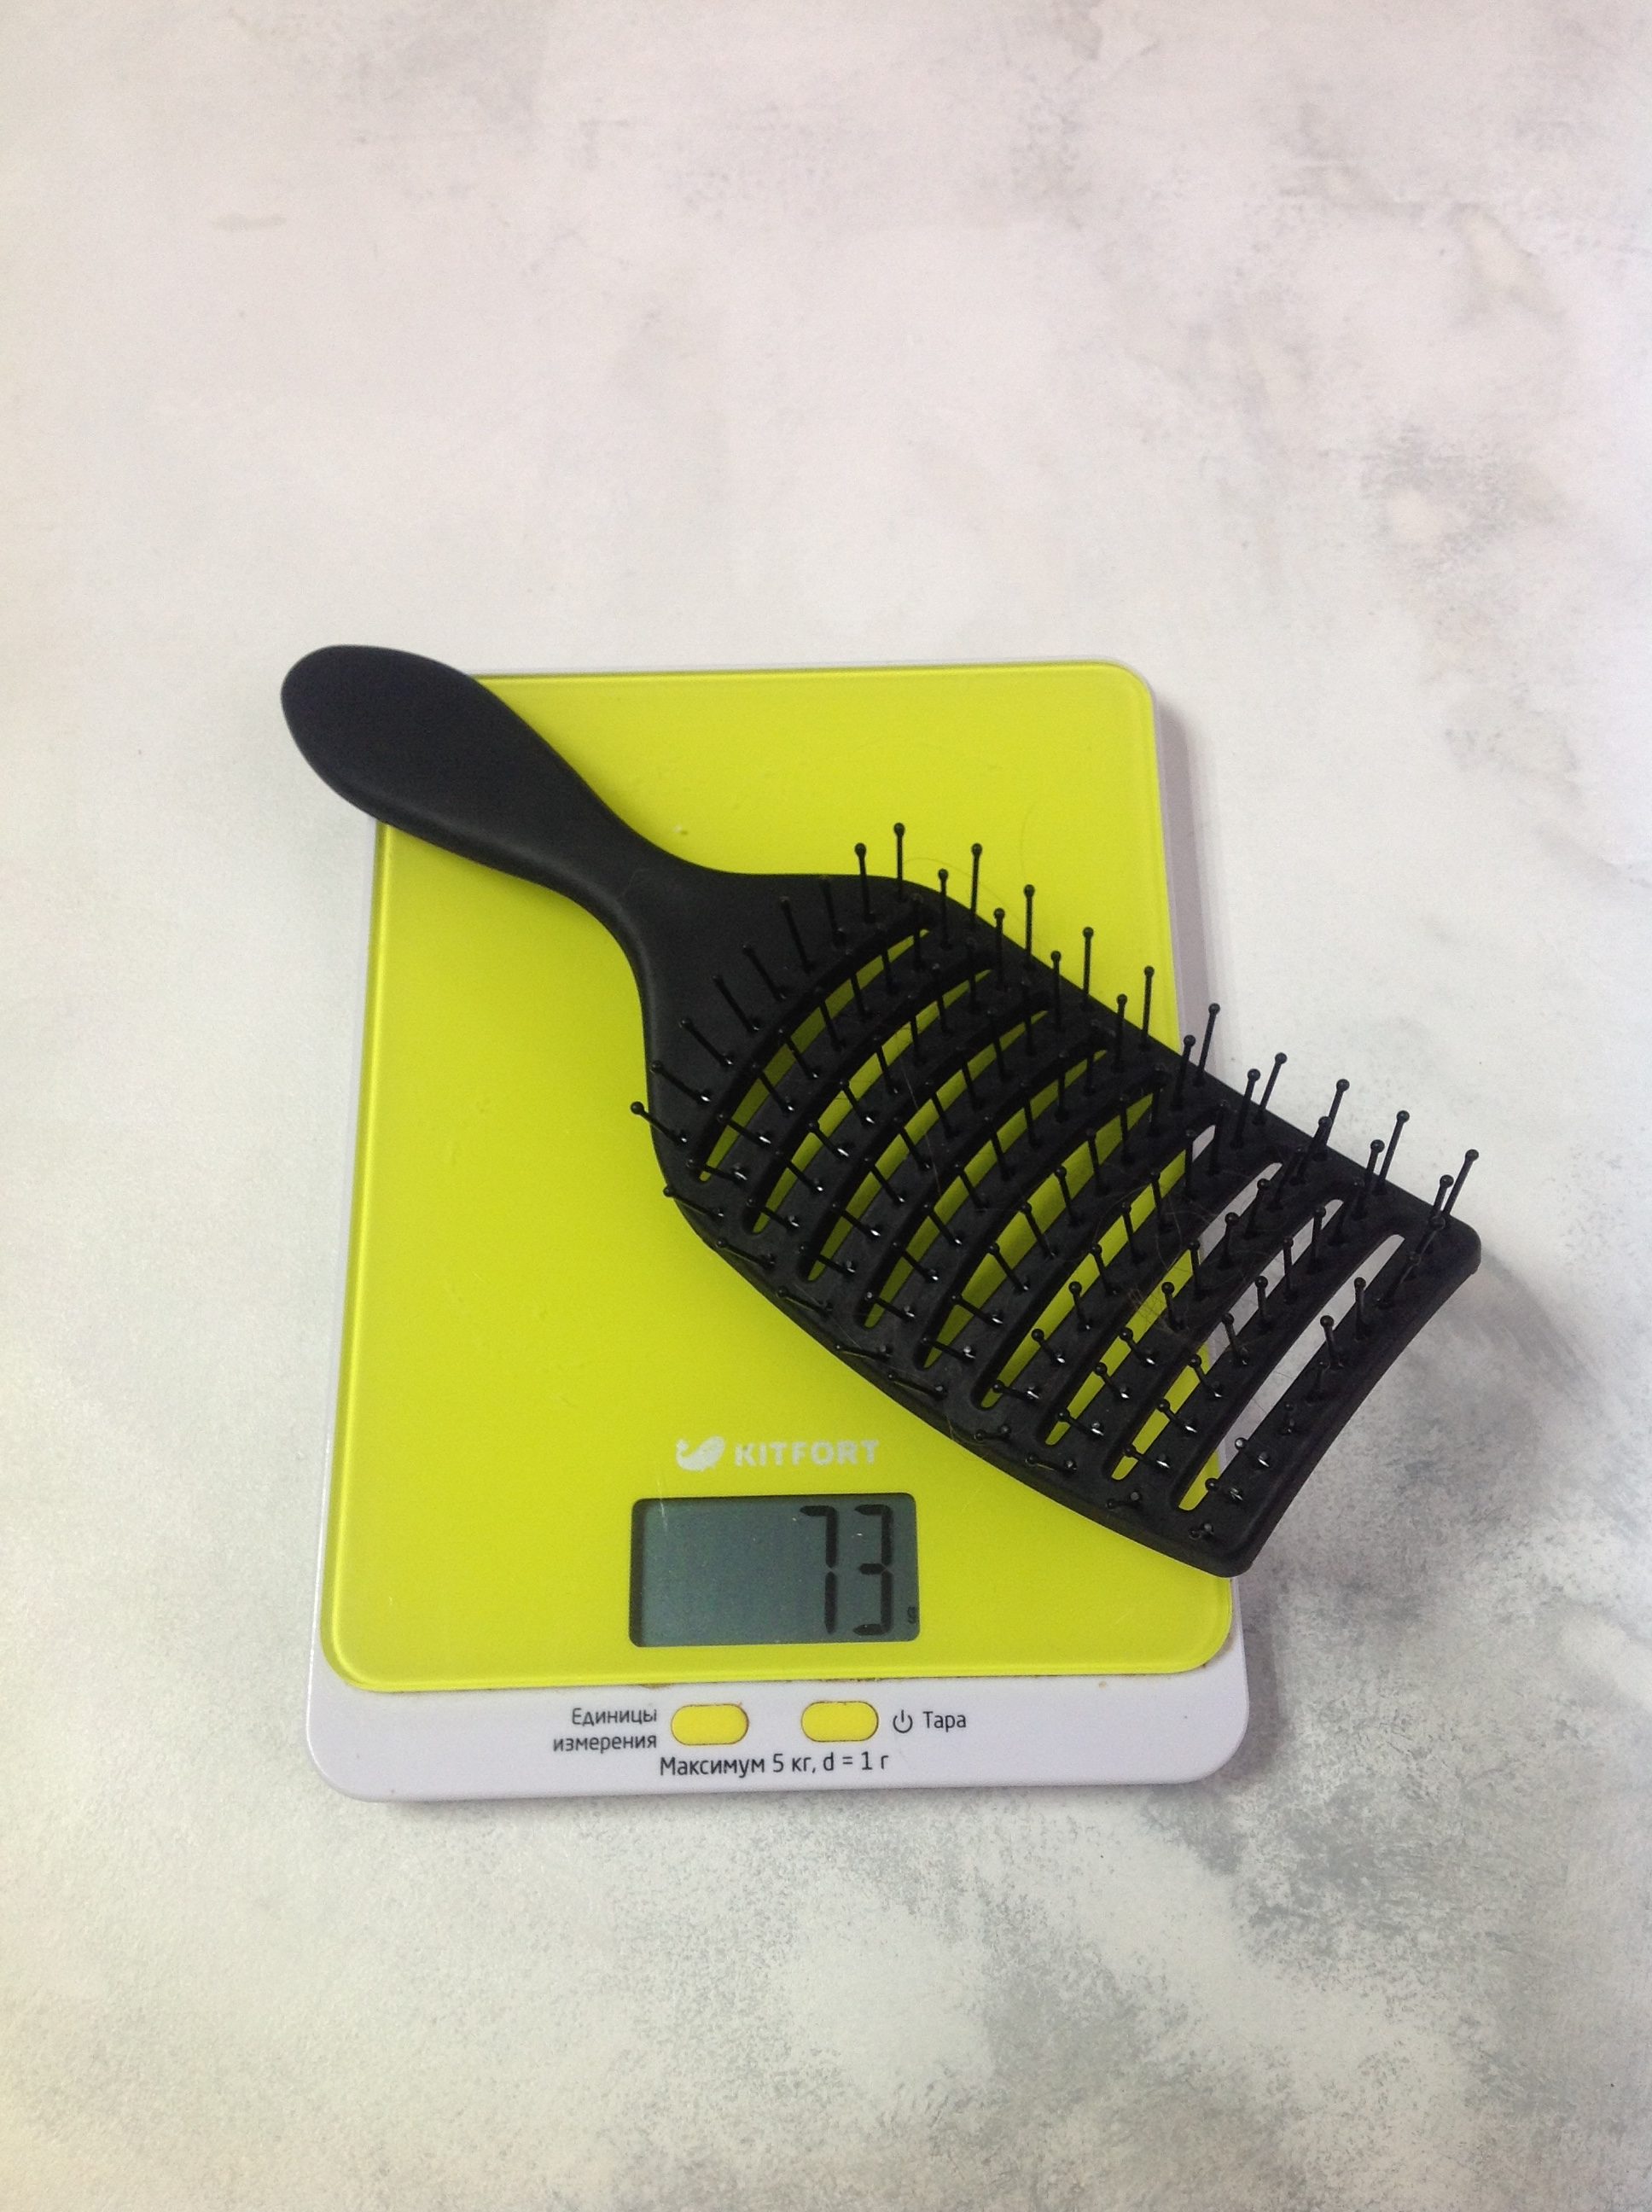 weight of a massage hairbrush